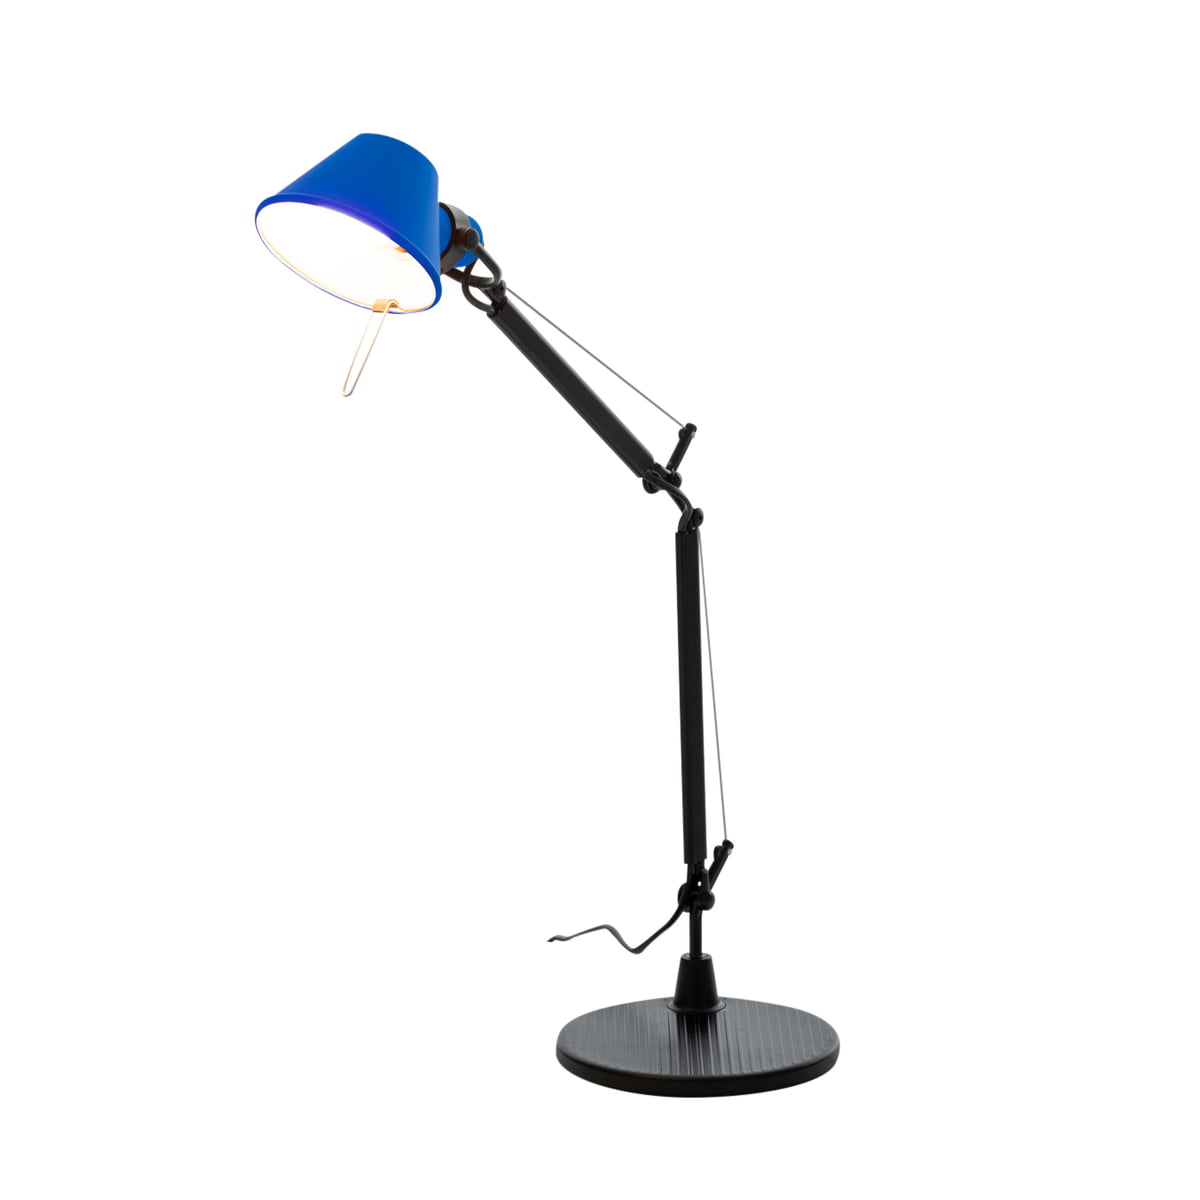 Artemide - Tolomeo Micro Bicolor table lamp, black / blue